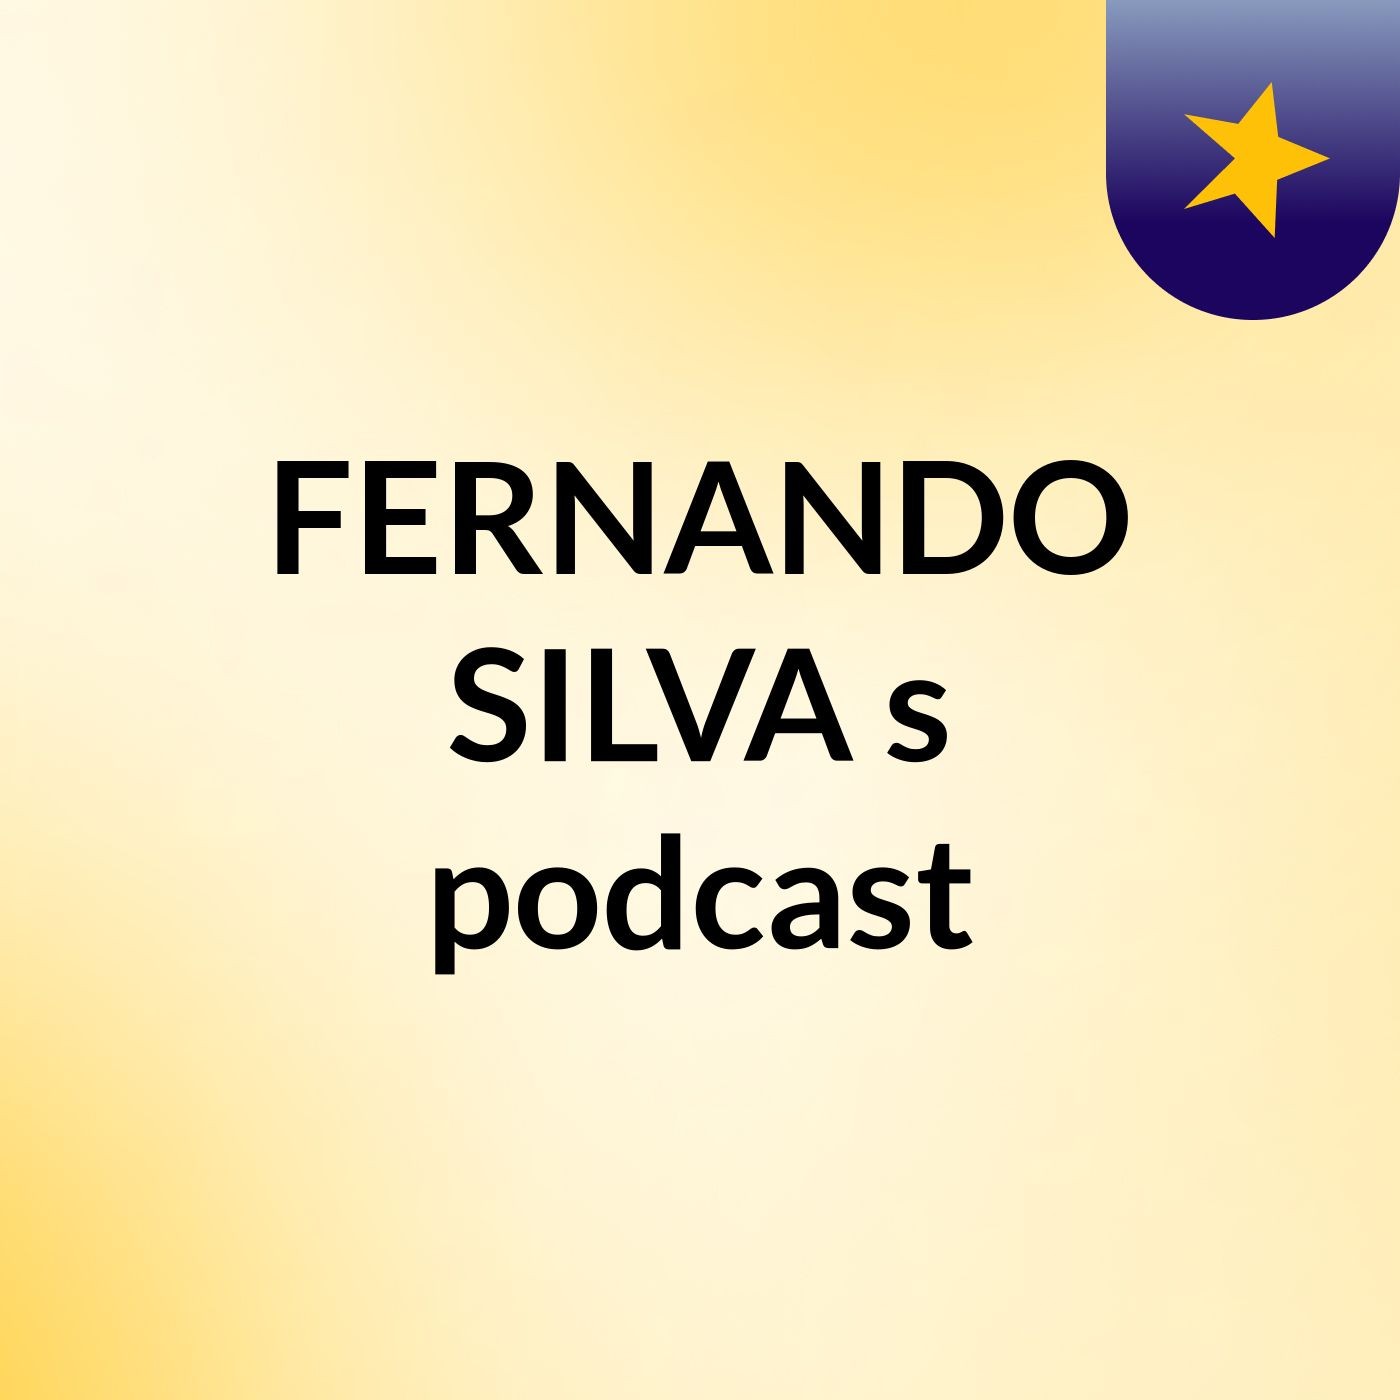 FERNANDO SILVA's podcast